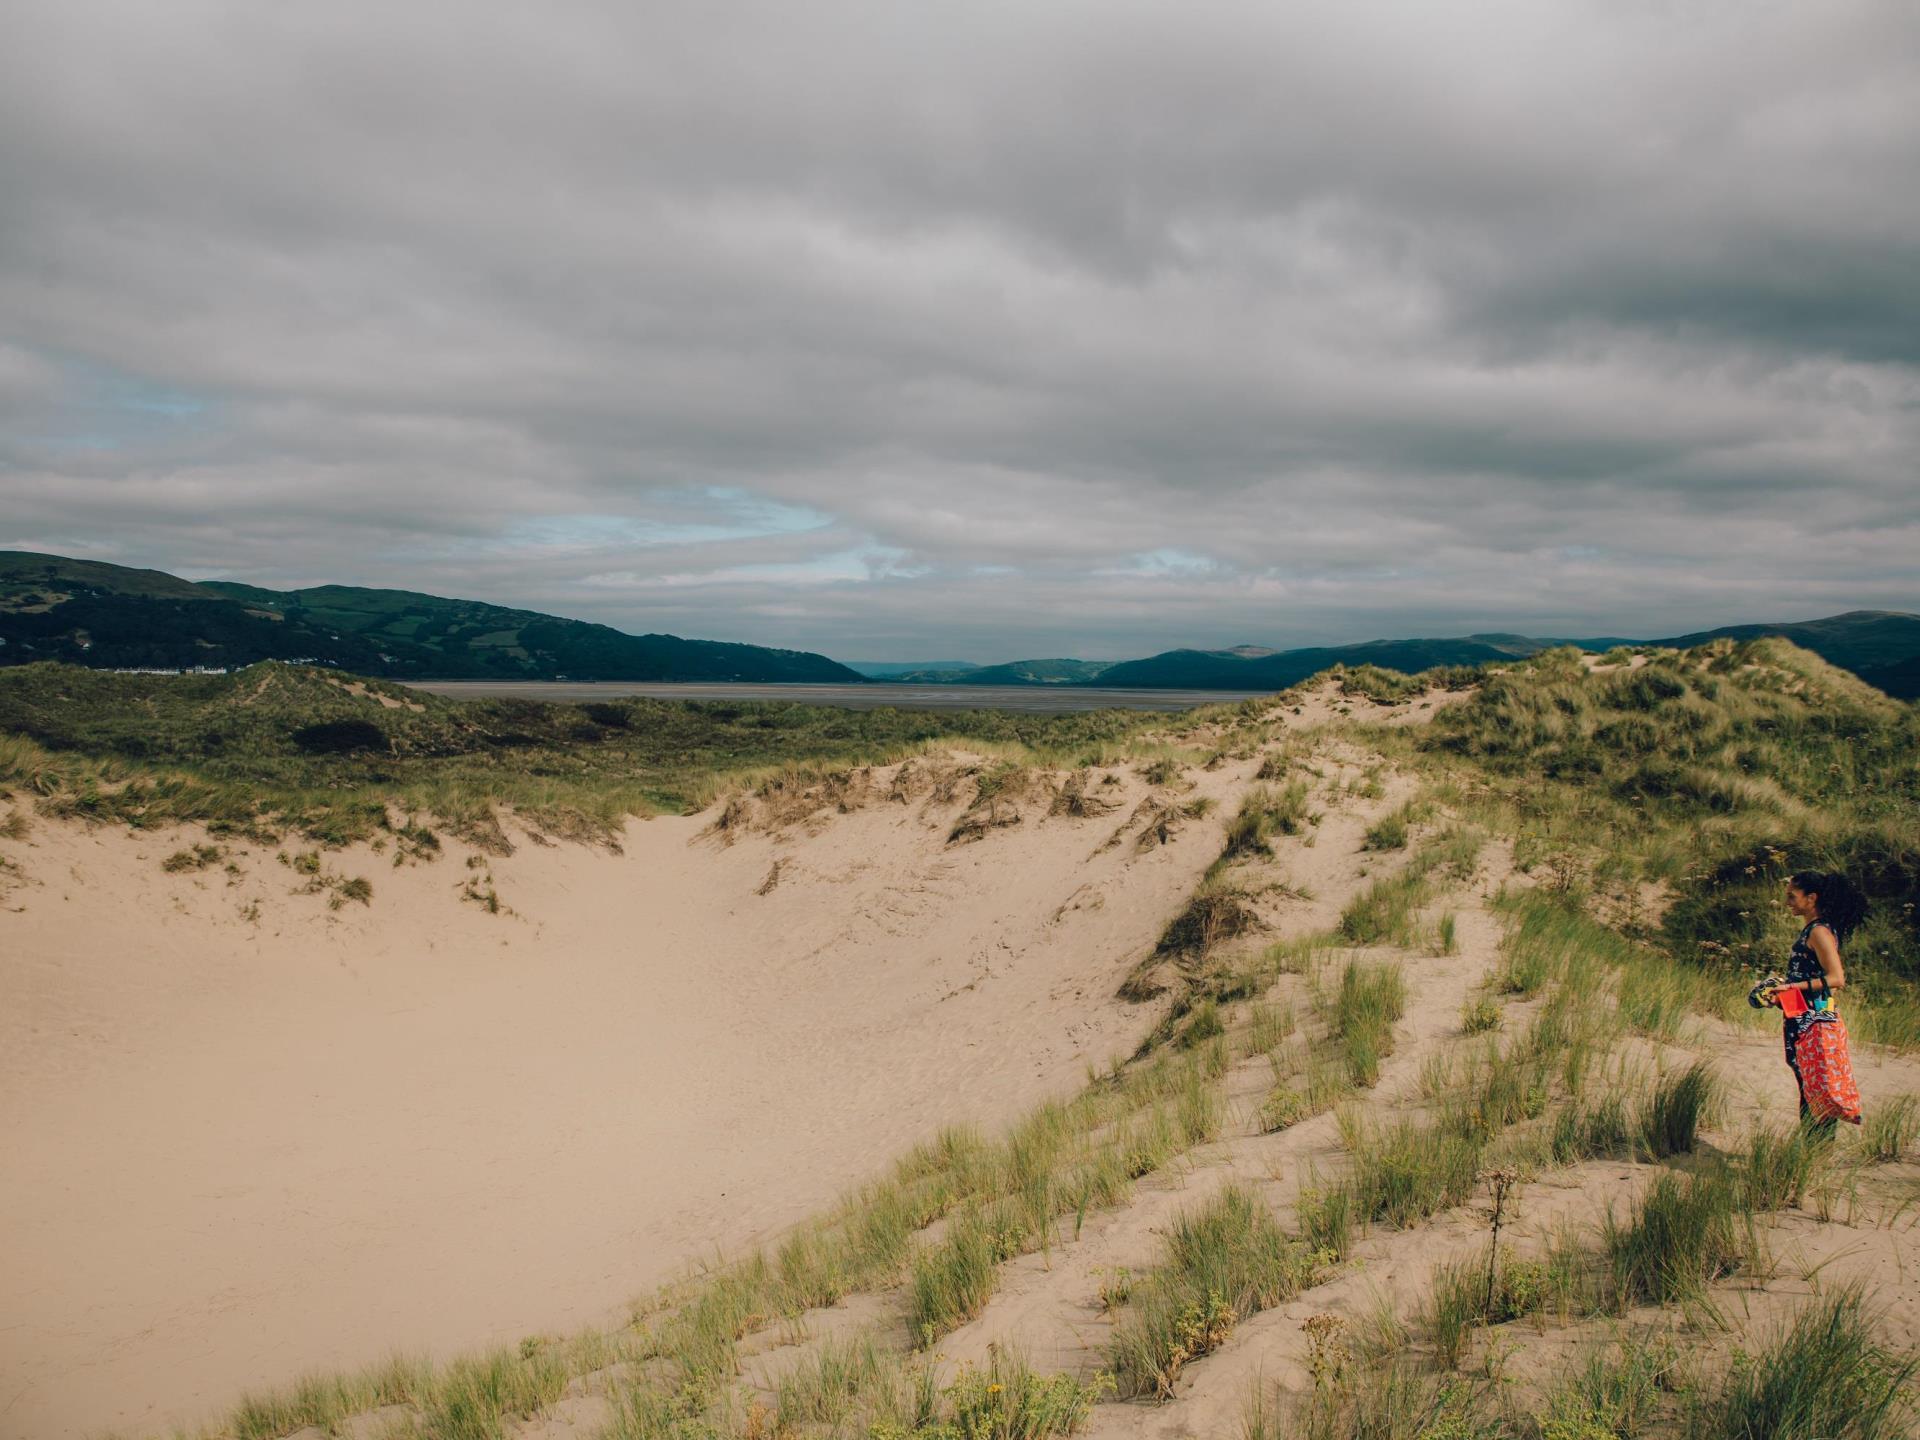 Ynyslas Dunes, largest sand dunes in Ceredigion